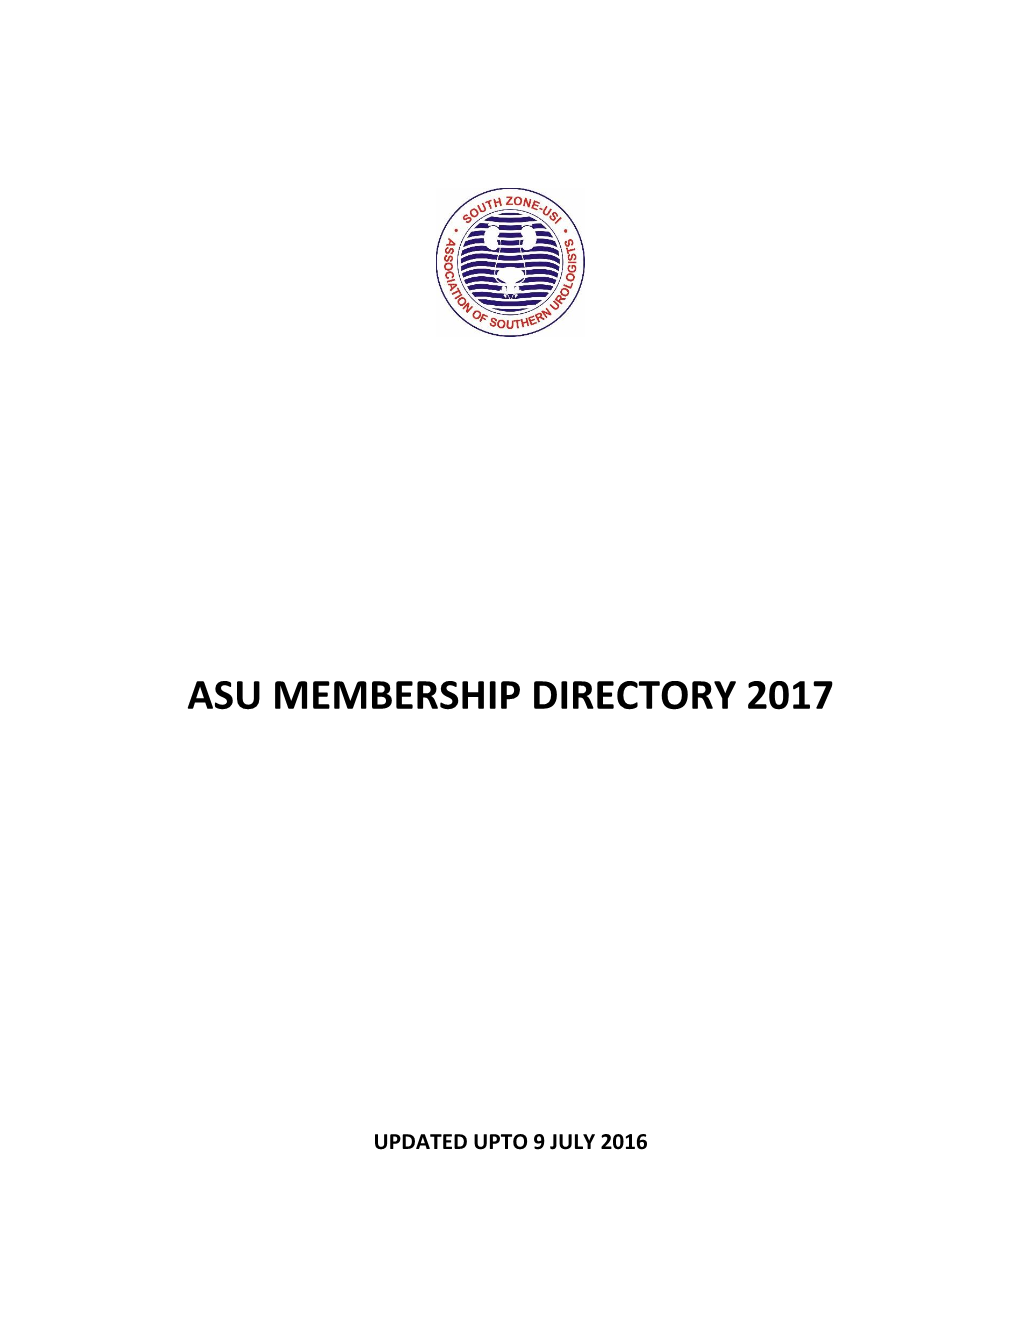 Asu Membership Directory 2017